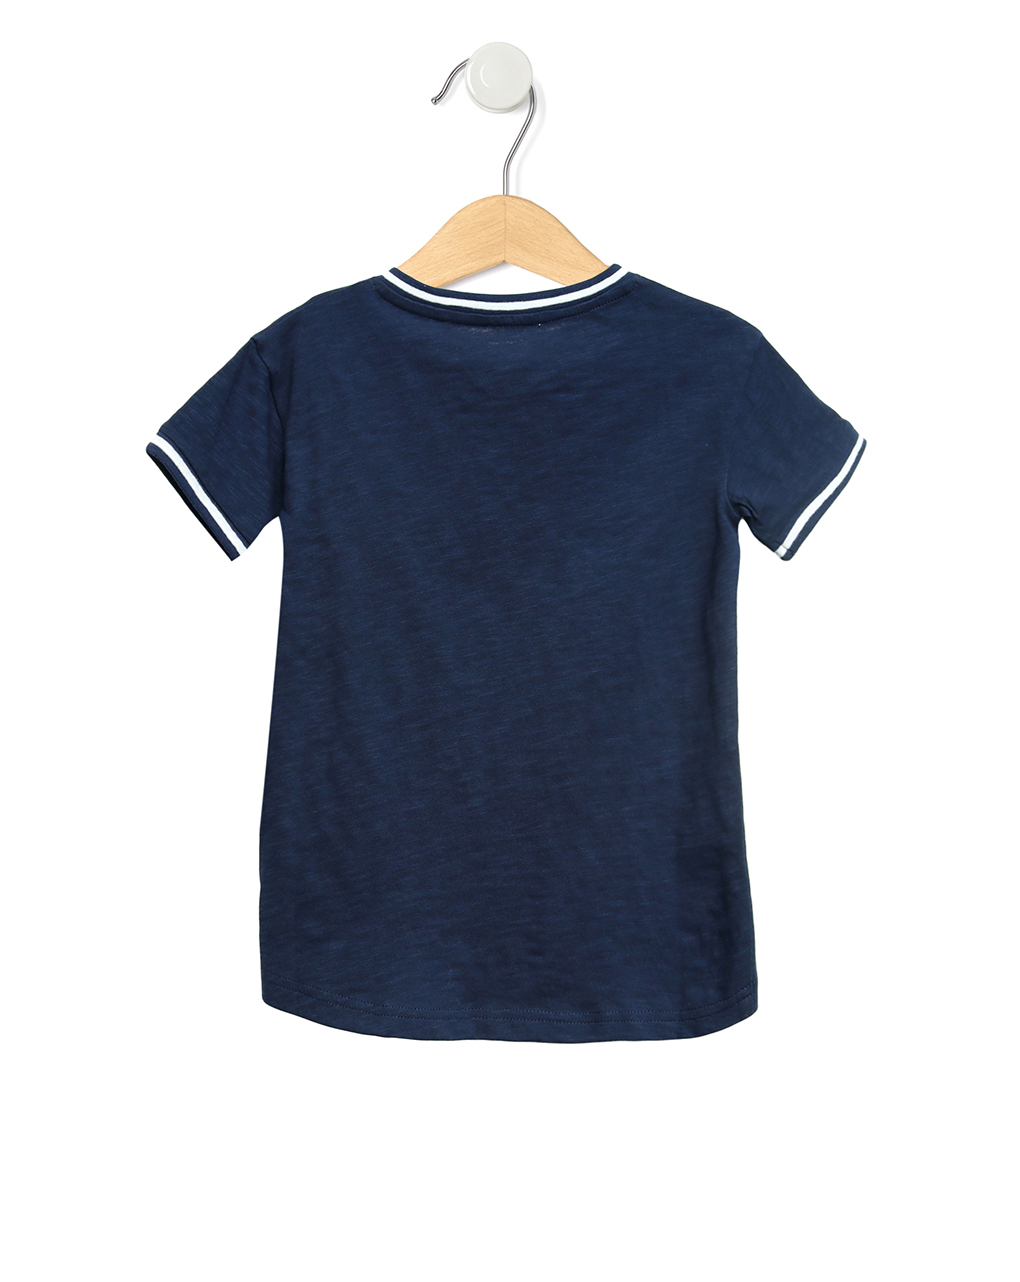 T-shirt basic σκούρο μπλε μεγ.8-9/9-10 ετών για αγόρι - Prénatal